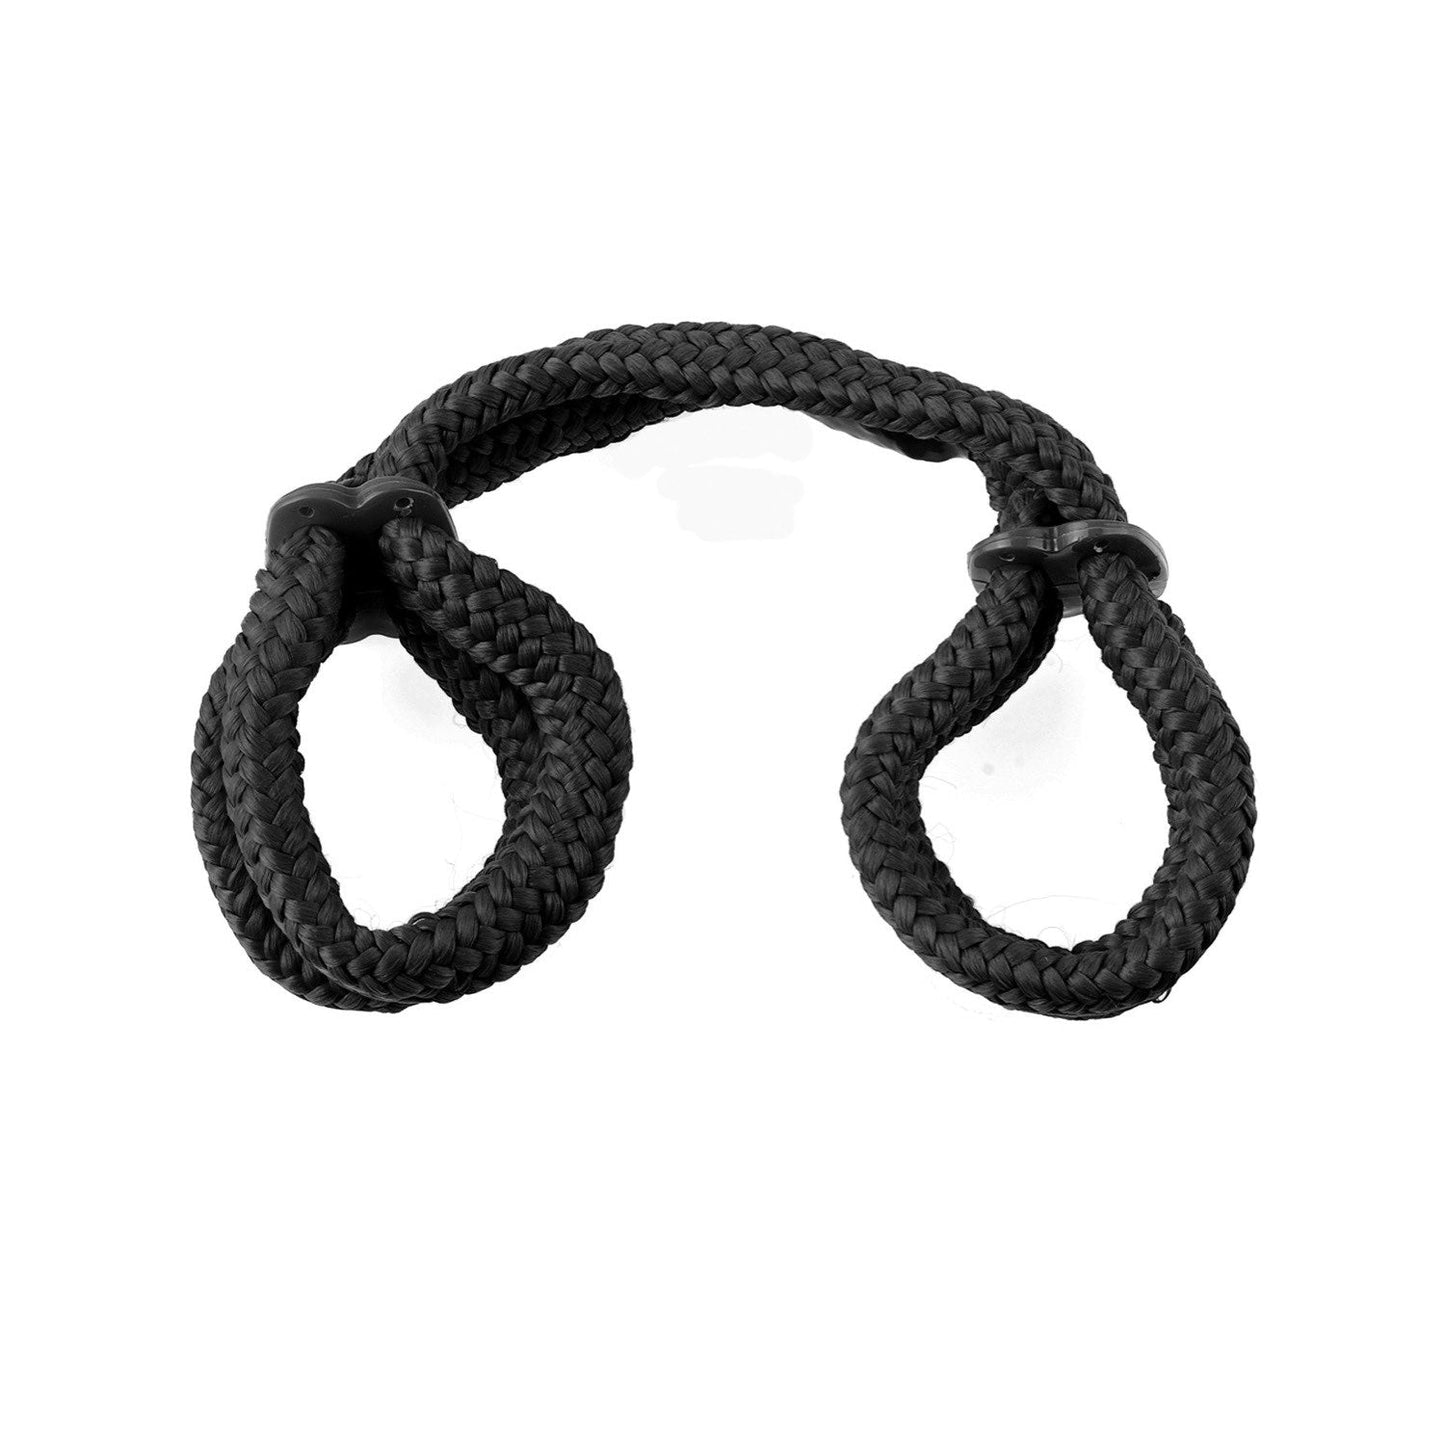 Silk Rope Love Cuffs - Black Restraints